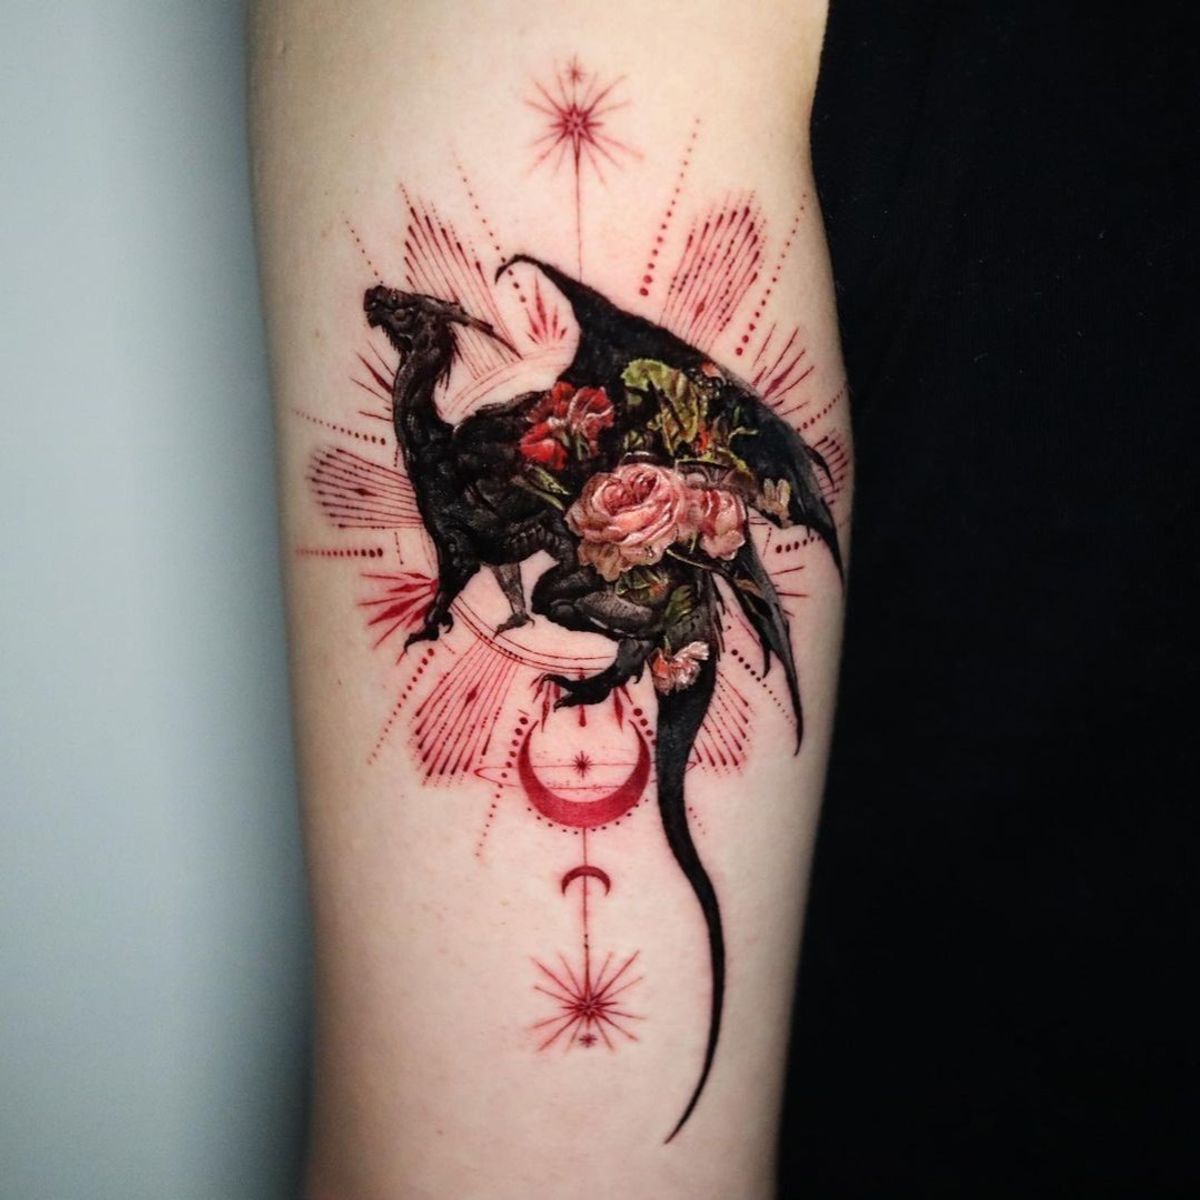 Tattoo uploaded by Anatta Vela • Dragon tattoo by Eunb.tt #Eunbtt # ...